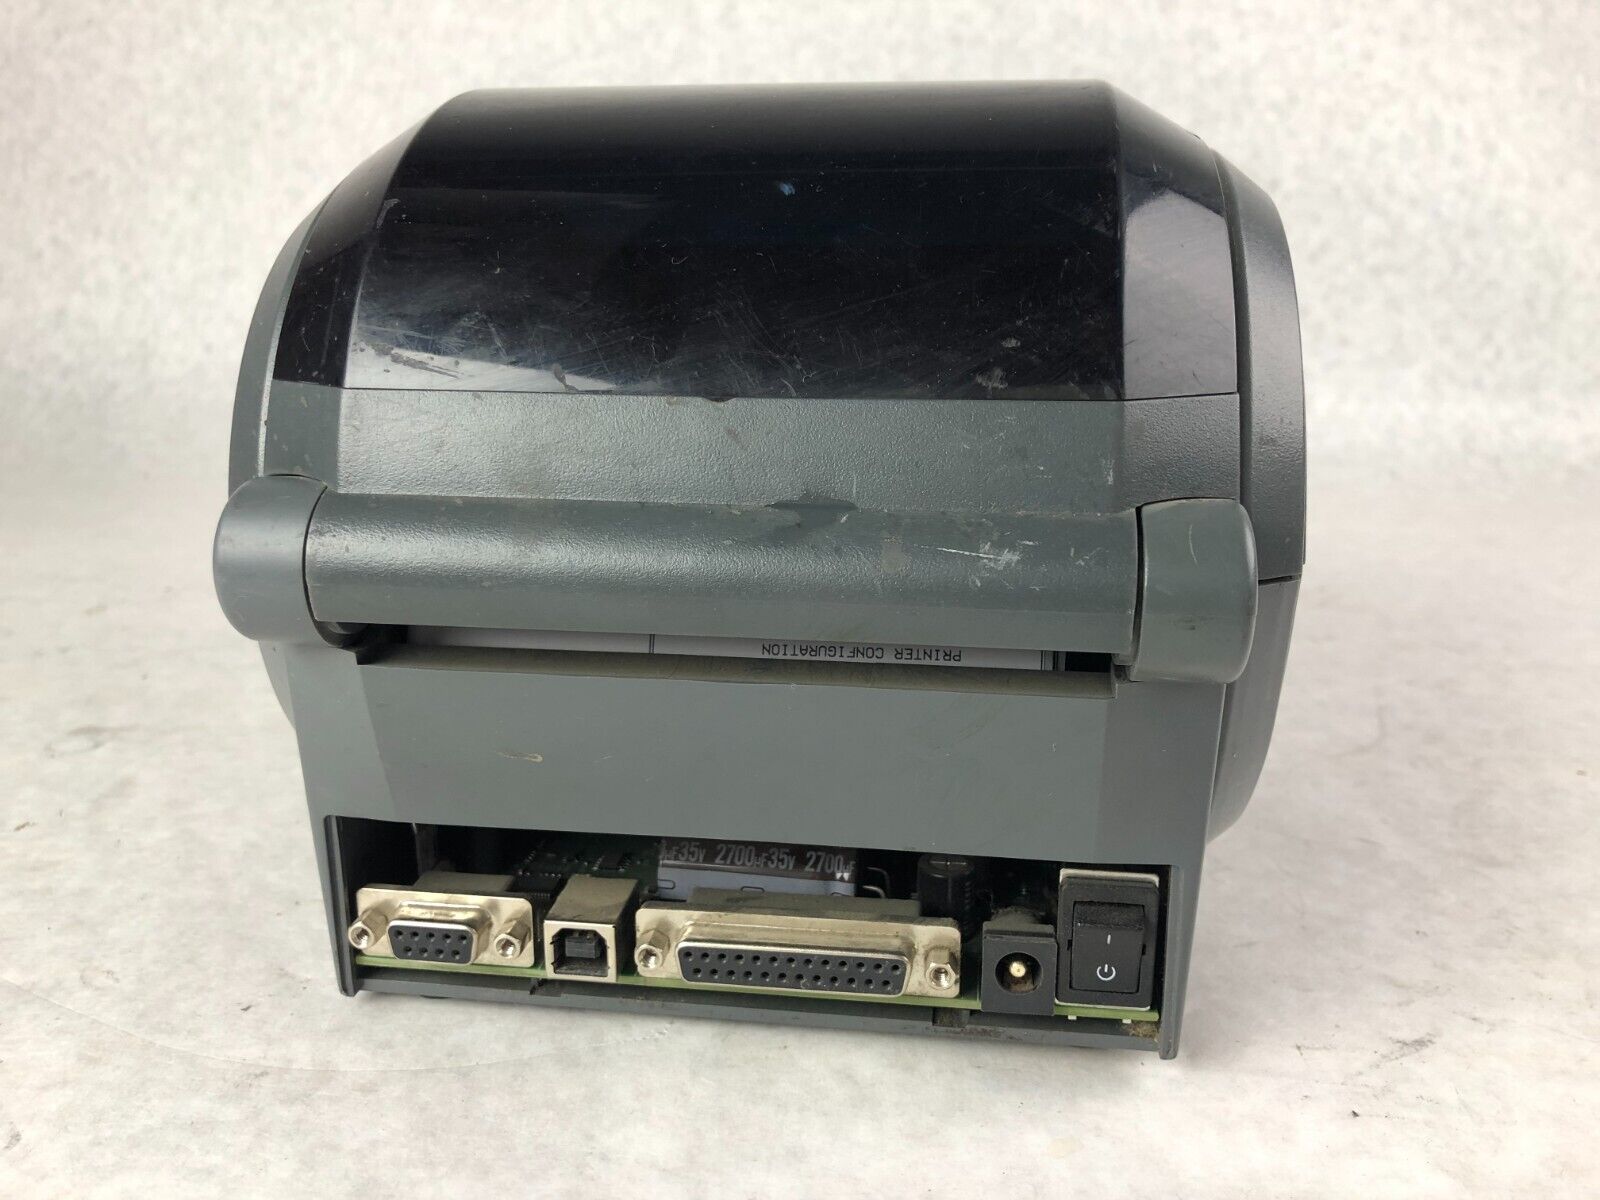 Zebra GX420d Thermal Label Printer USB Serial - No Roller or Power Supply